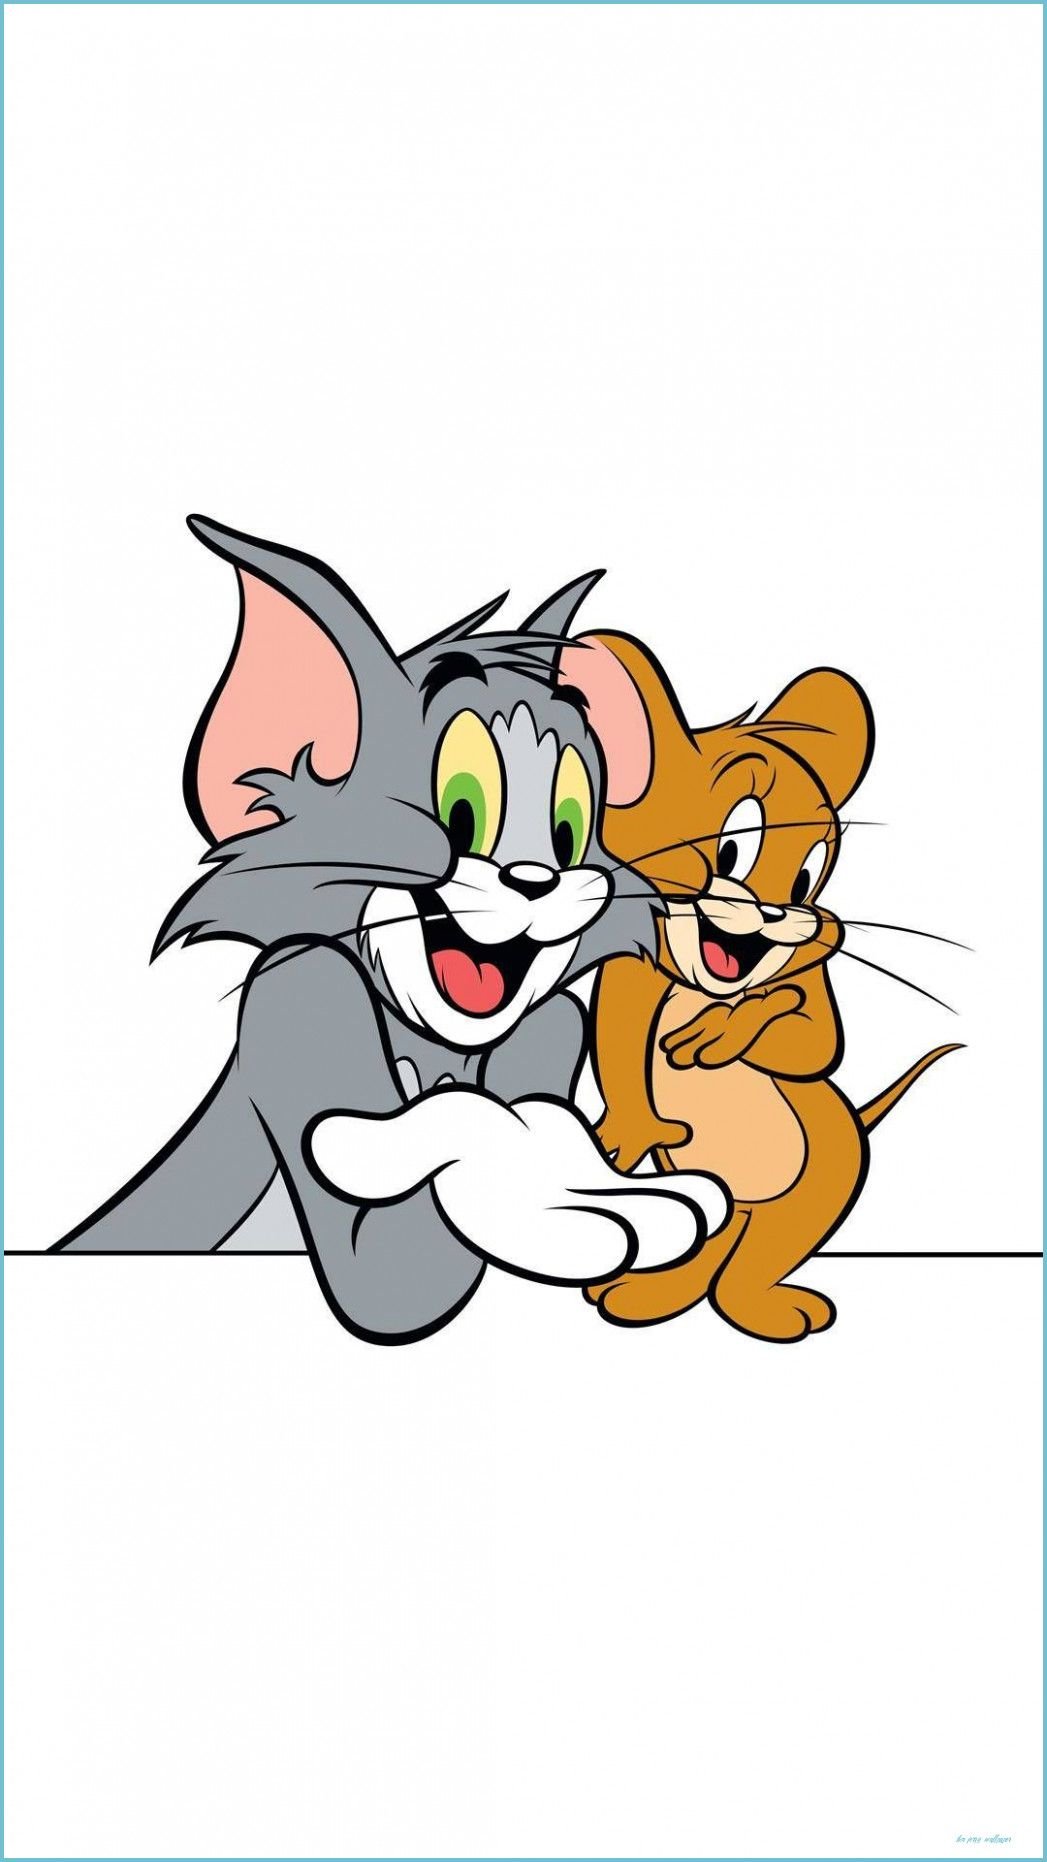 Tom and Jerry   Tom ve jerry Şirin çizim Sevimli karikatür